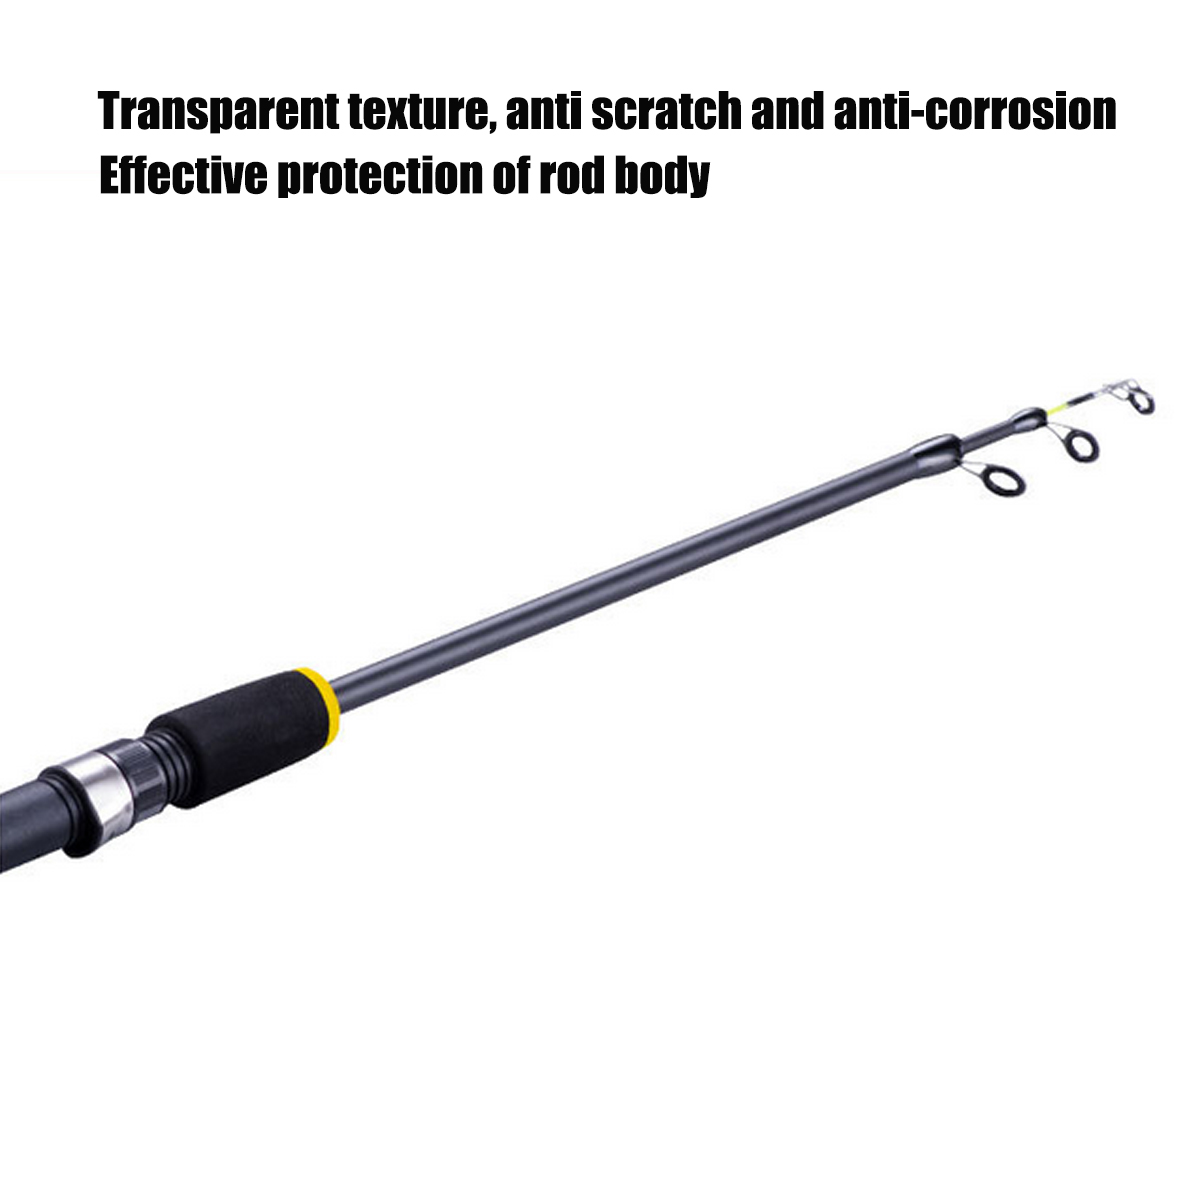 ZANLURE-12m-Fiberglass-Telescopic-Fishing-Rod-Set-Lightweight-Portable-Anti-corrosion-Anti-scratch-S-1807415-6